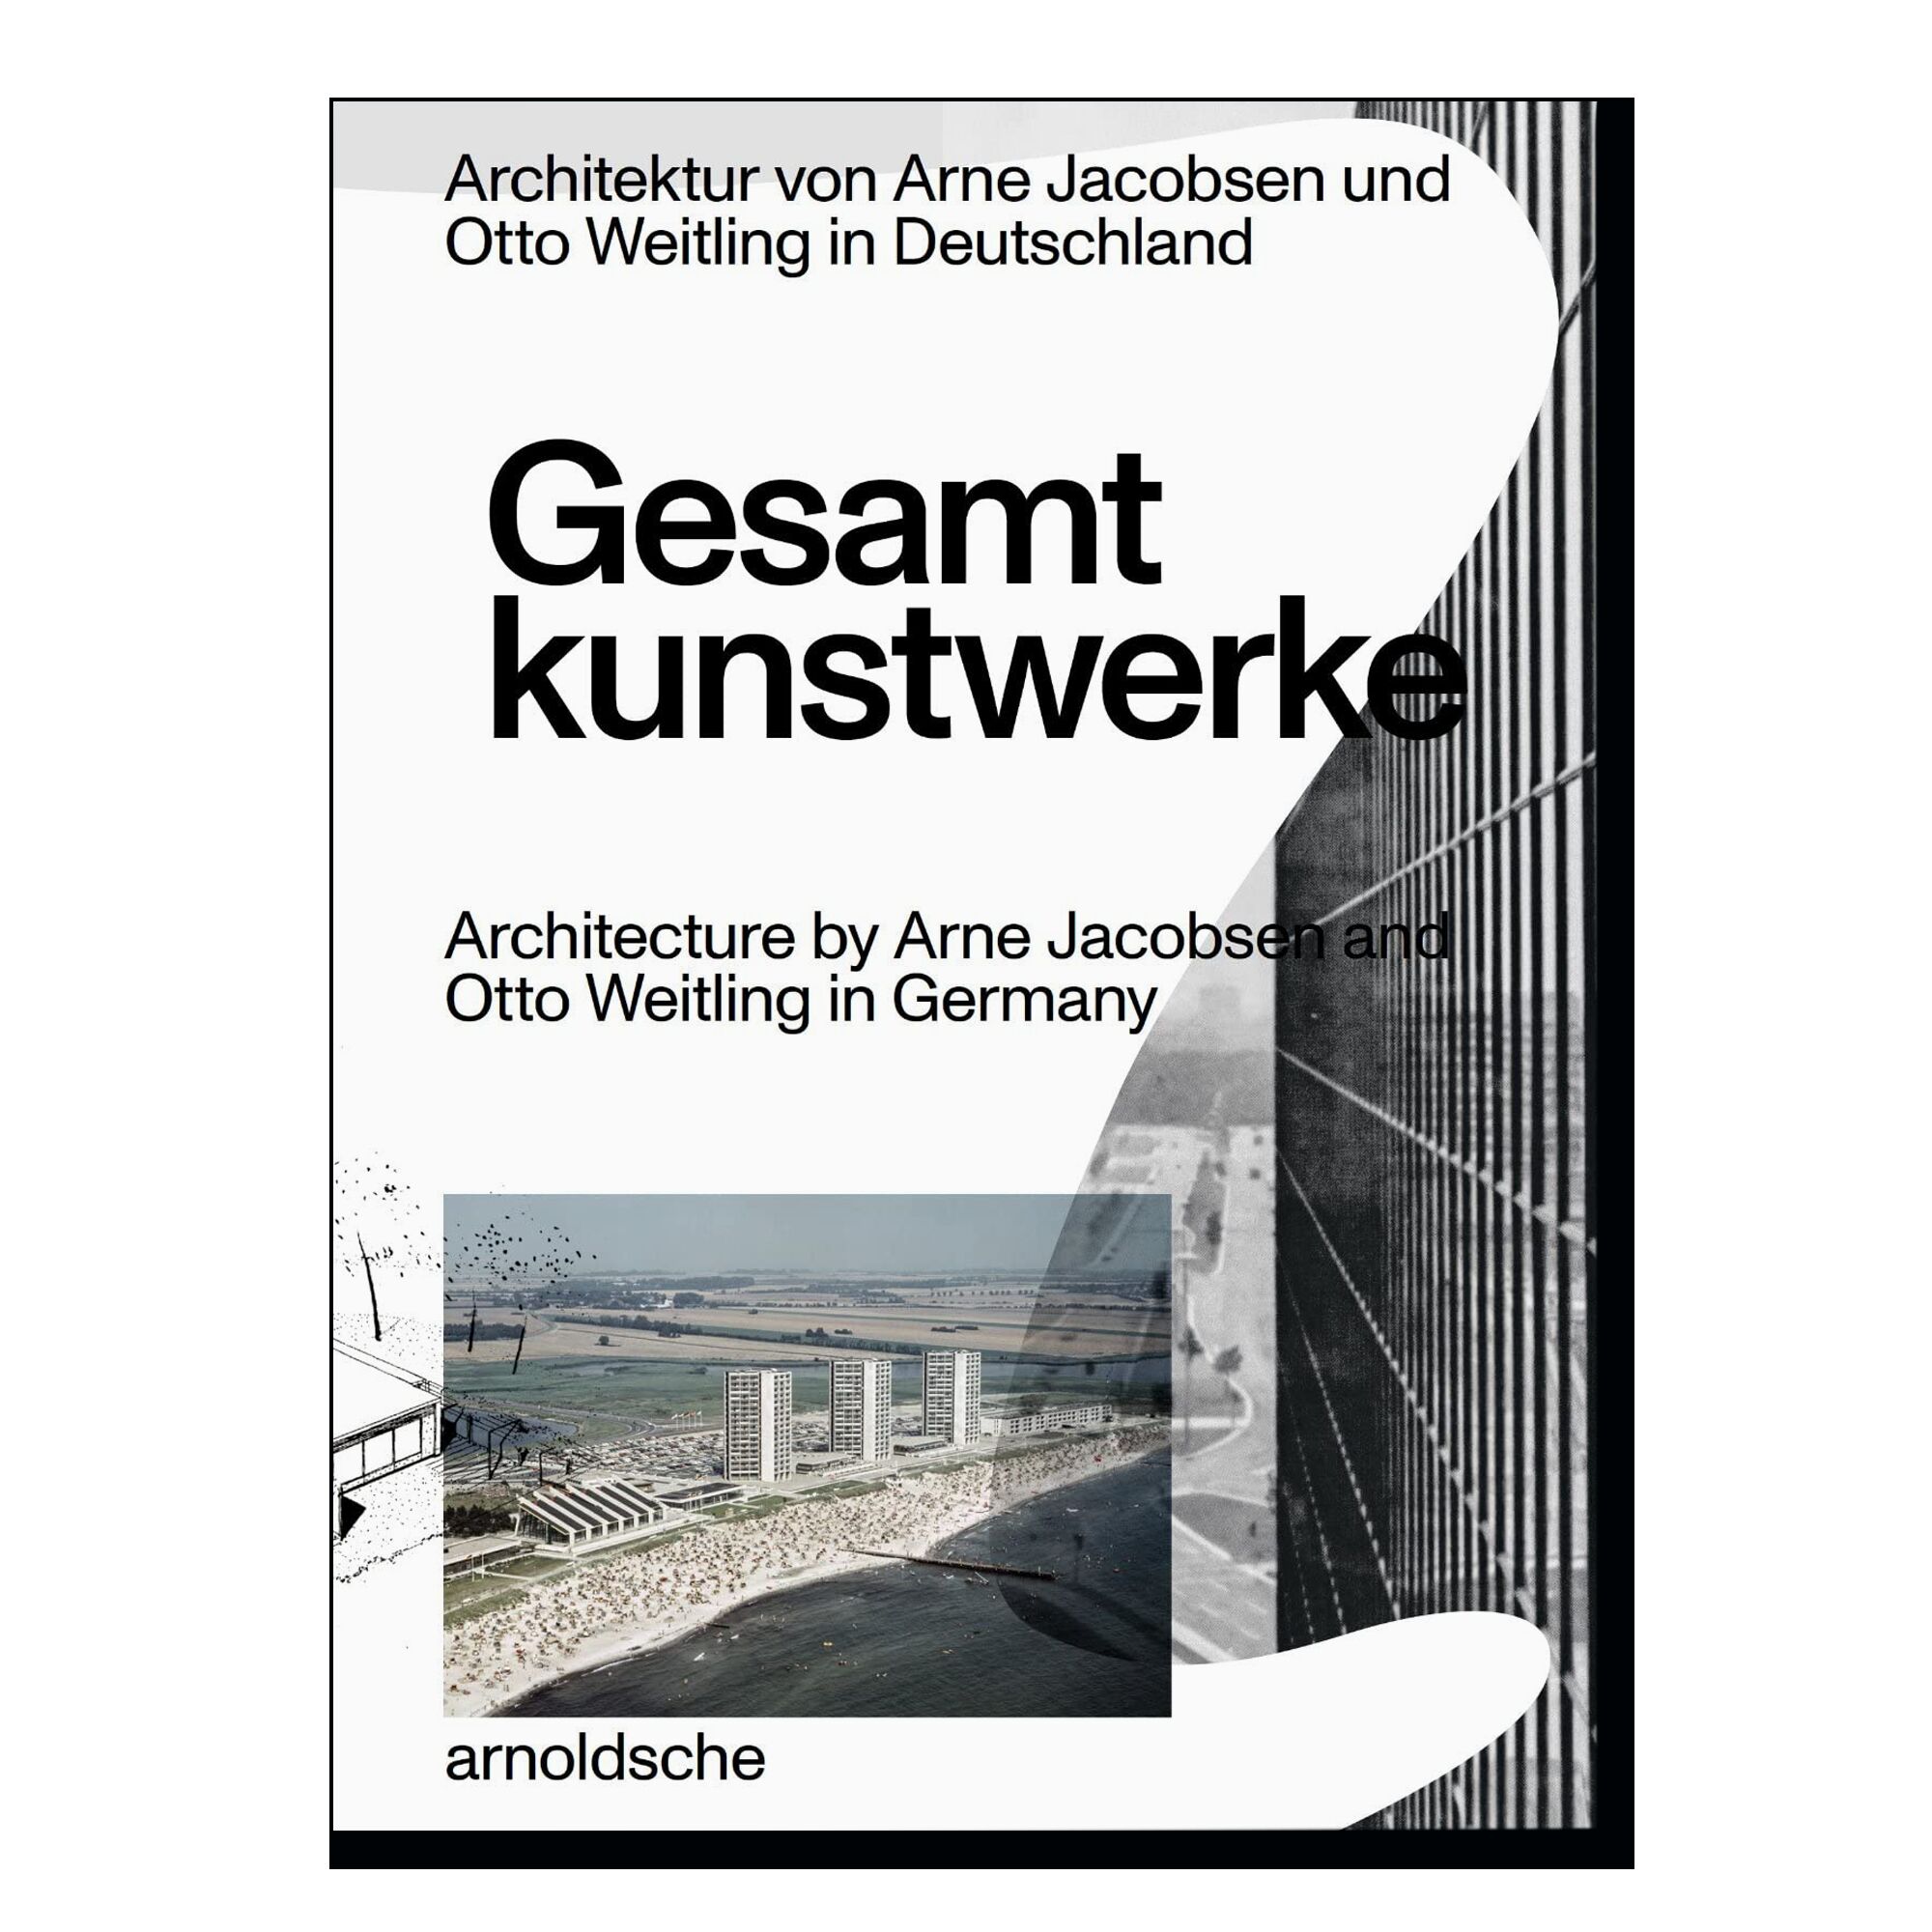 Gesamtkunstwerke: Architecture by Arne Jacobsen and Otto Weitling in Germany